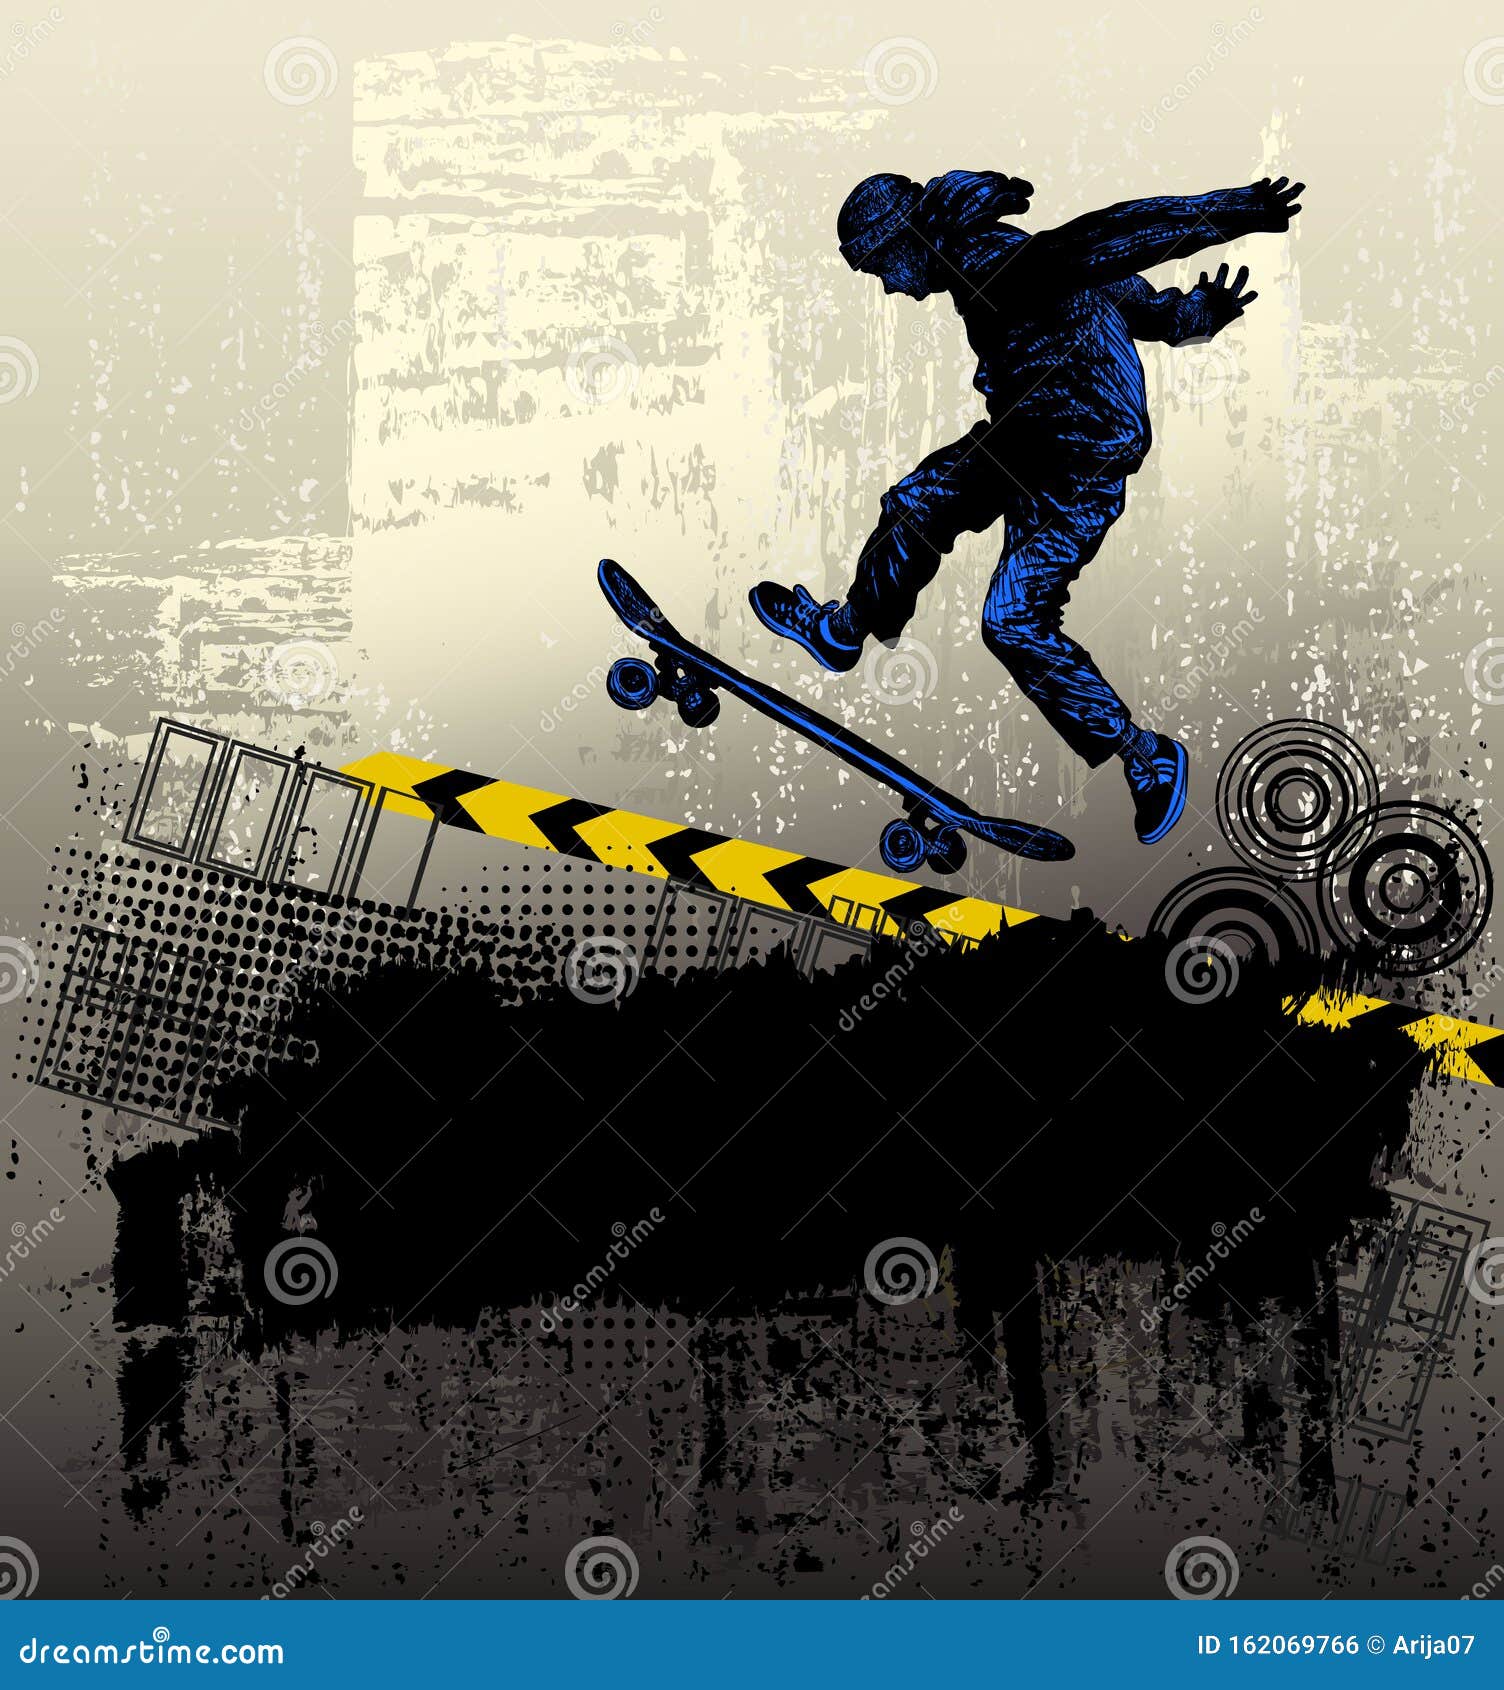 Uitrusting Concurrenten eerlijk Skateboarding Background. Extreme Sports Illustration with Guy Skater Stock  Vector - Illustration of skateborder, skater: 162069766